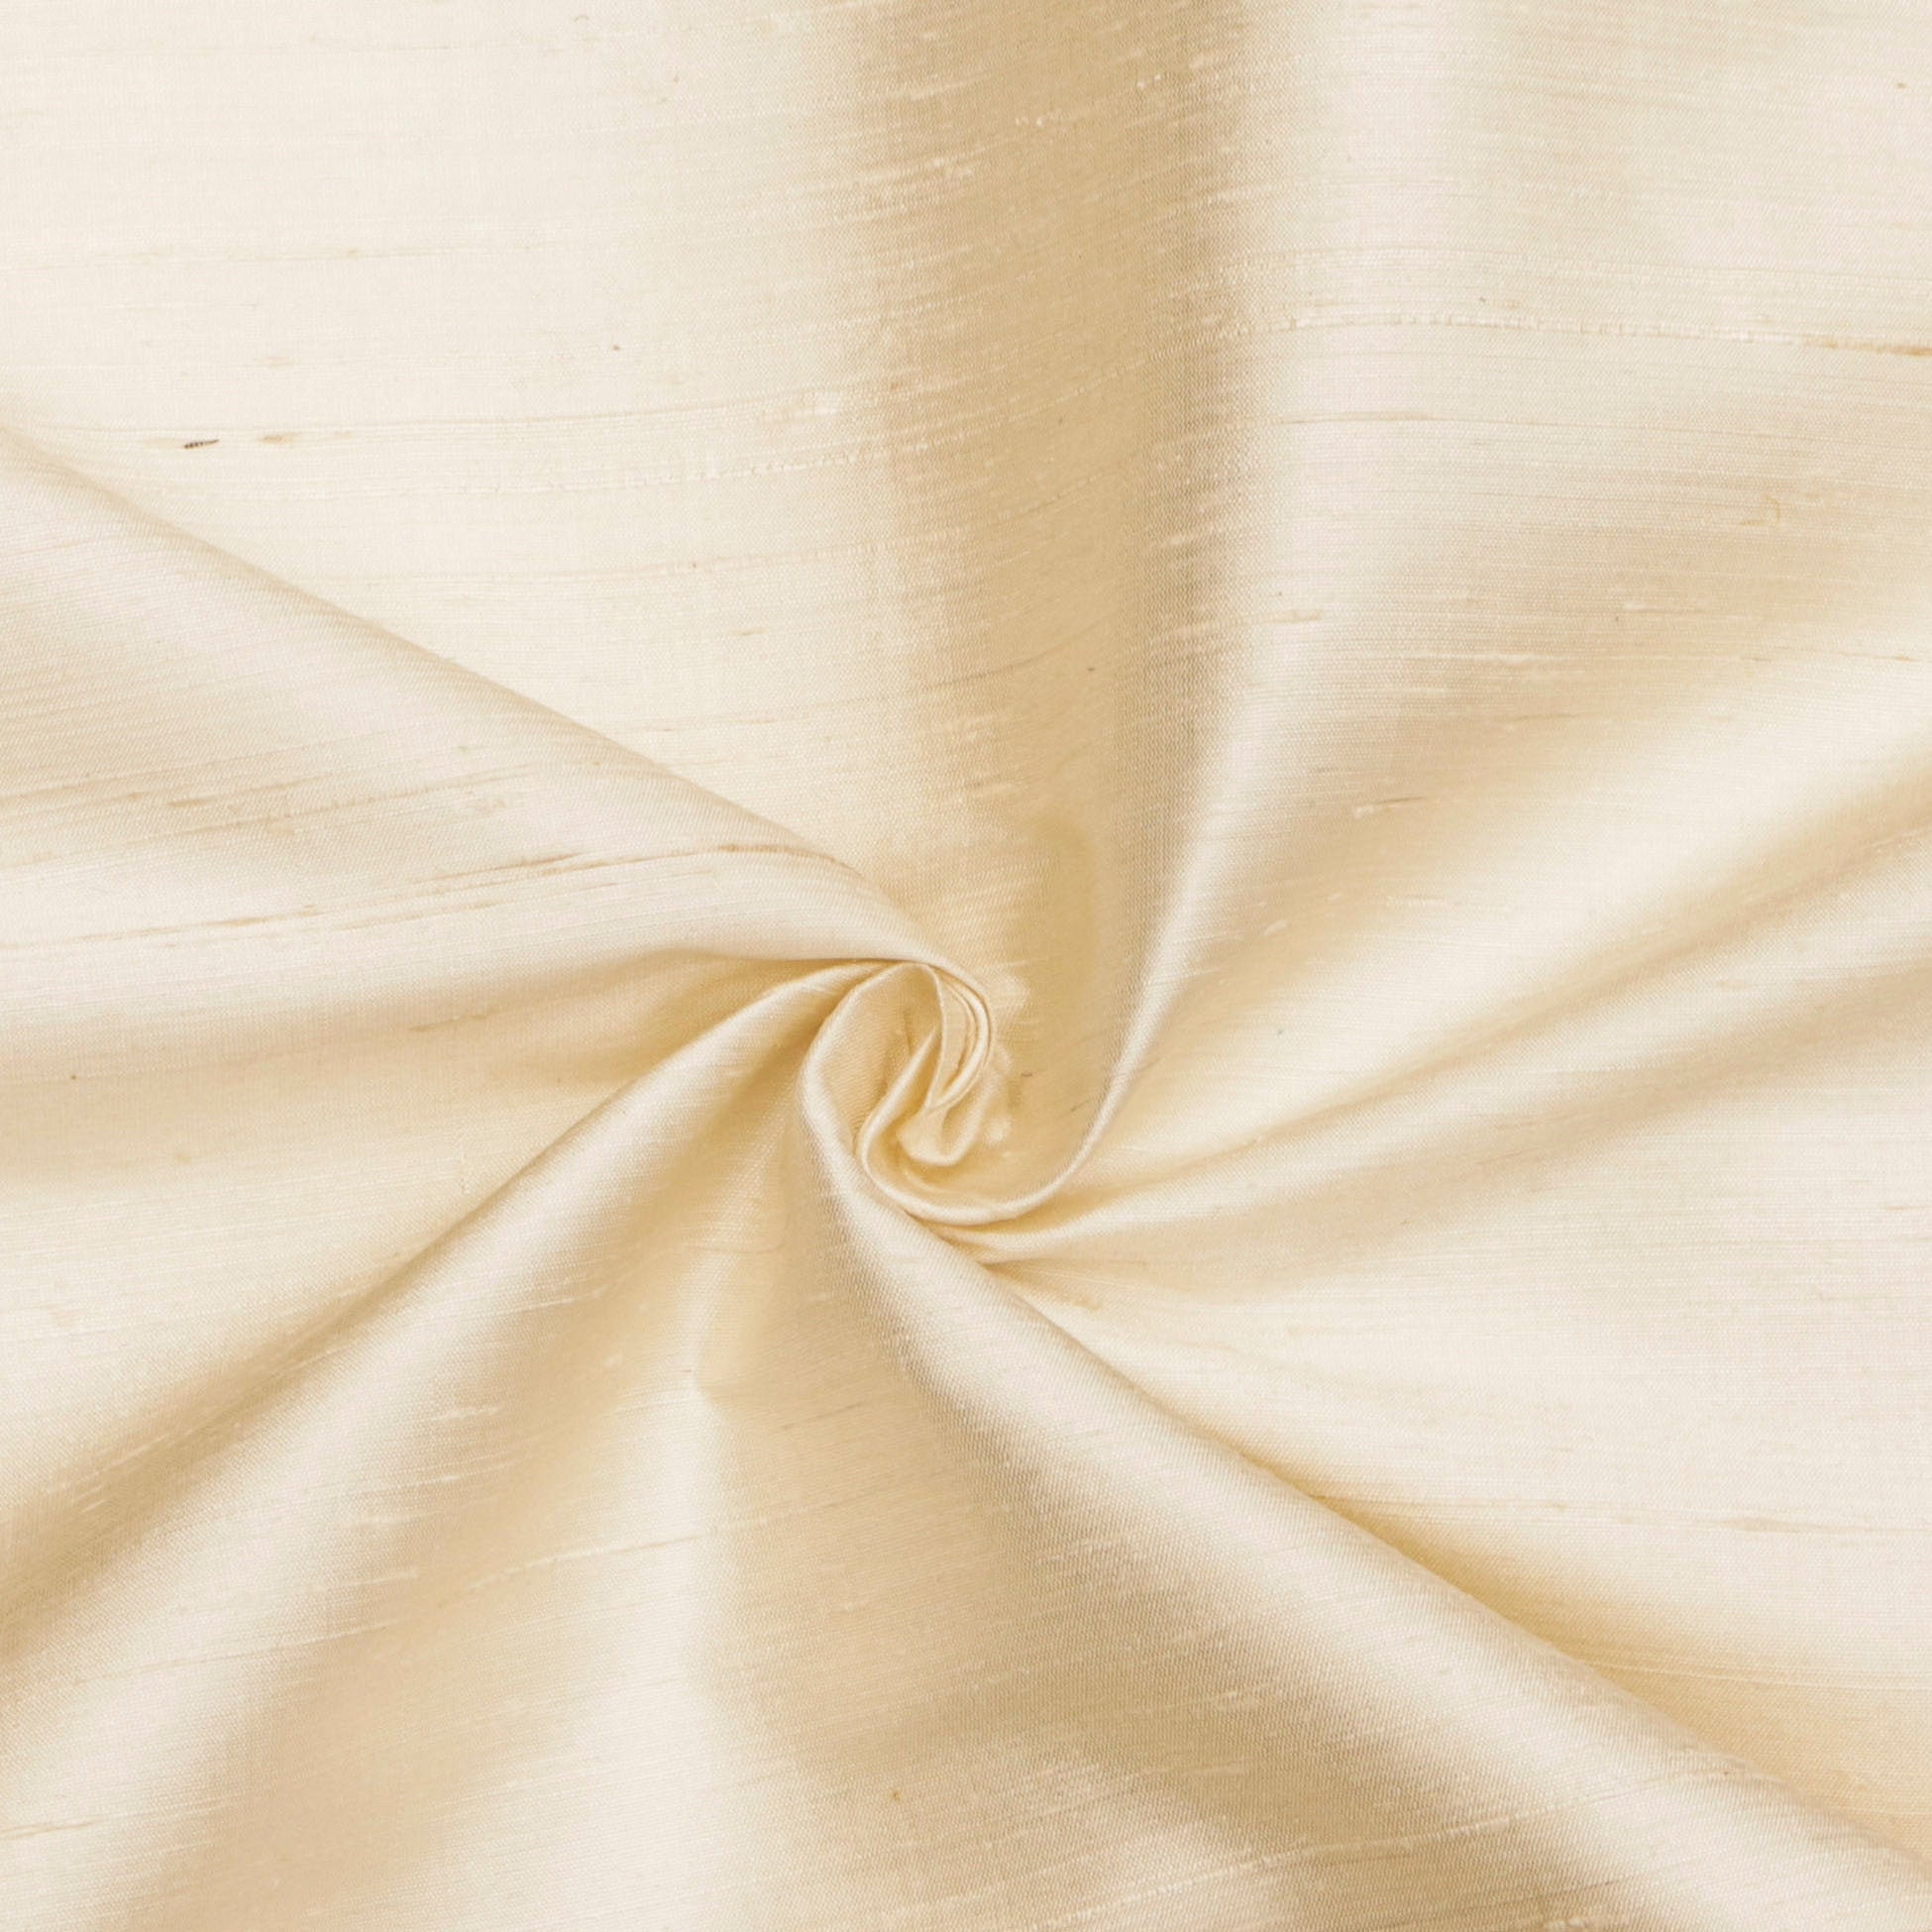 Charcoal Gray 100% Pure Silk Fabric by the Yard, 41 Inch Pure Dupioni Silk  Fabric, Luxurious Slub Silk Fabric for Dresses, Curtains, Drapes 